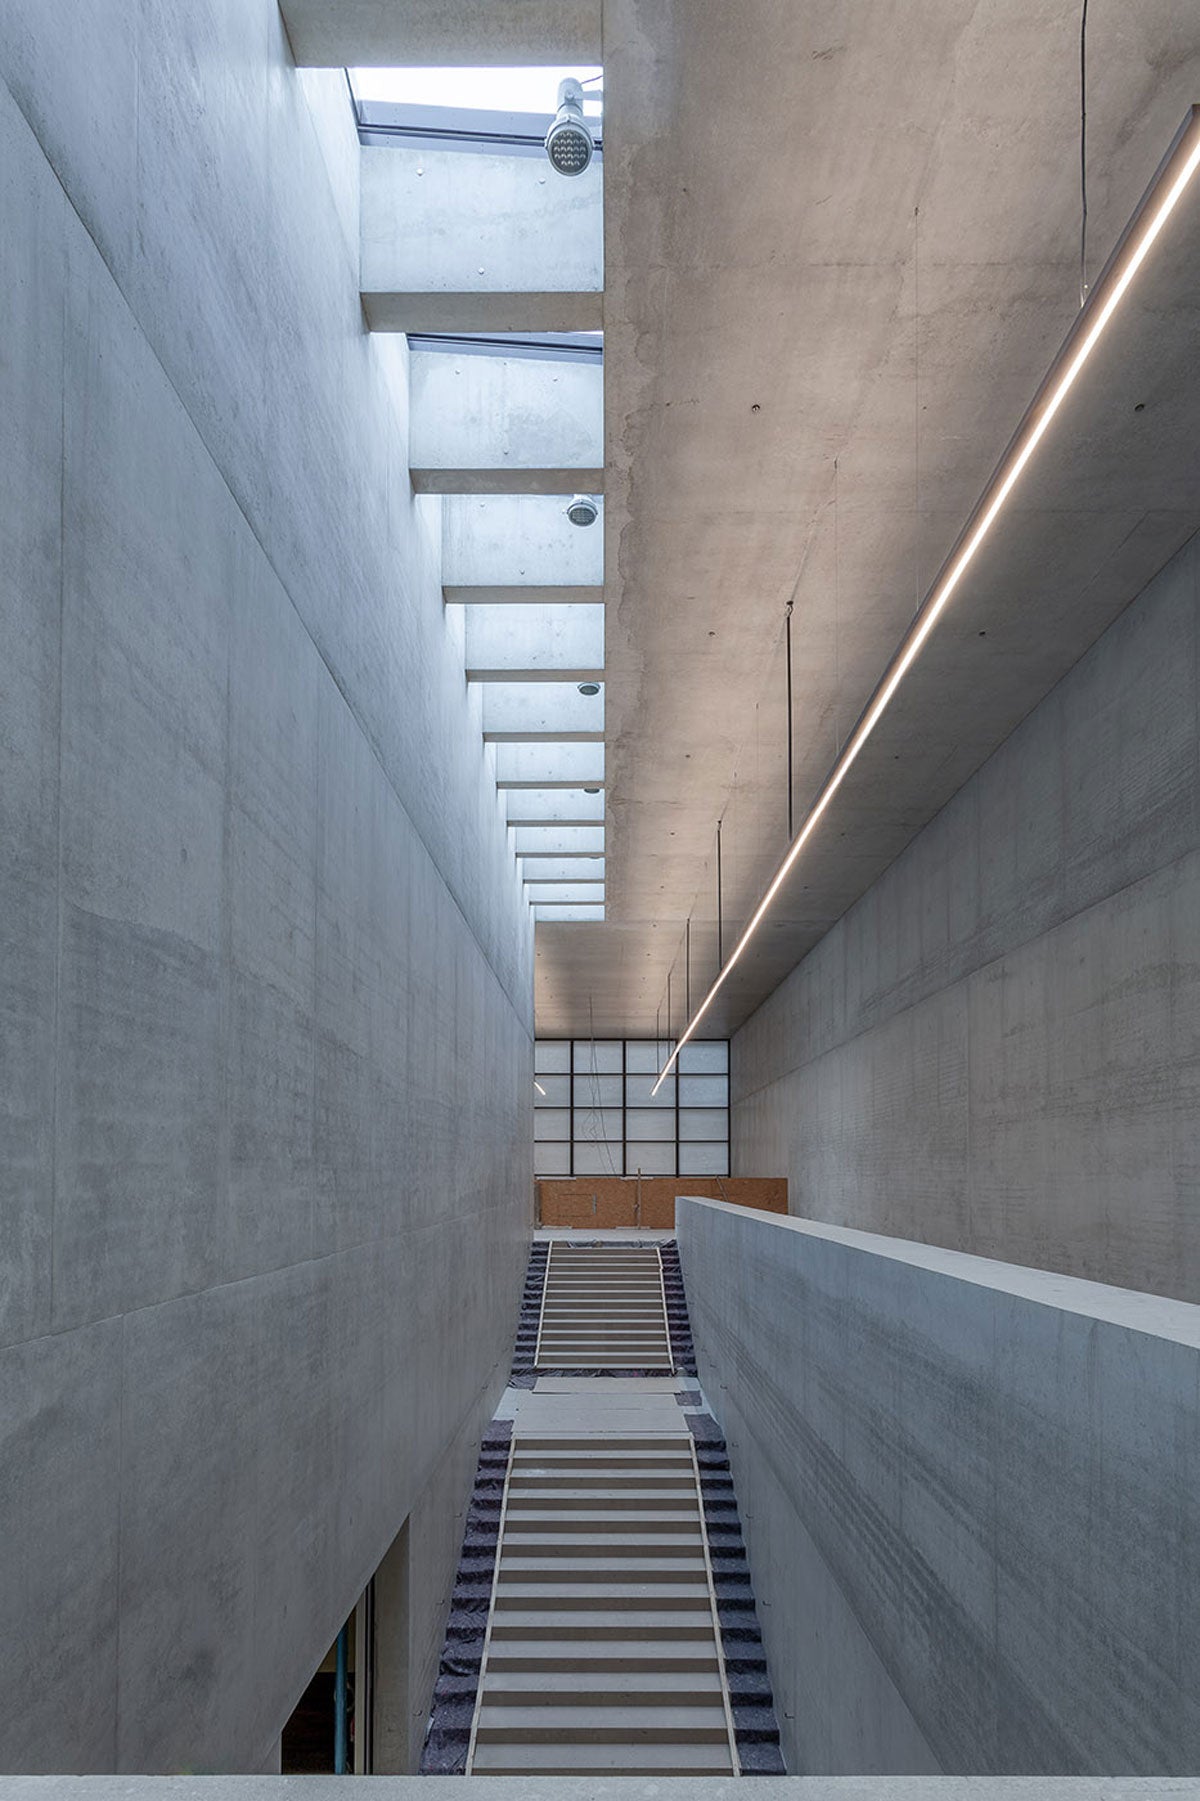 Una escalera interna conduce directamente al segundo nivel. Foto: BBR / SPK / Björn Schumann